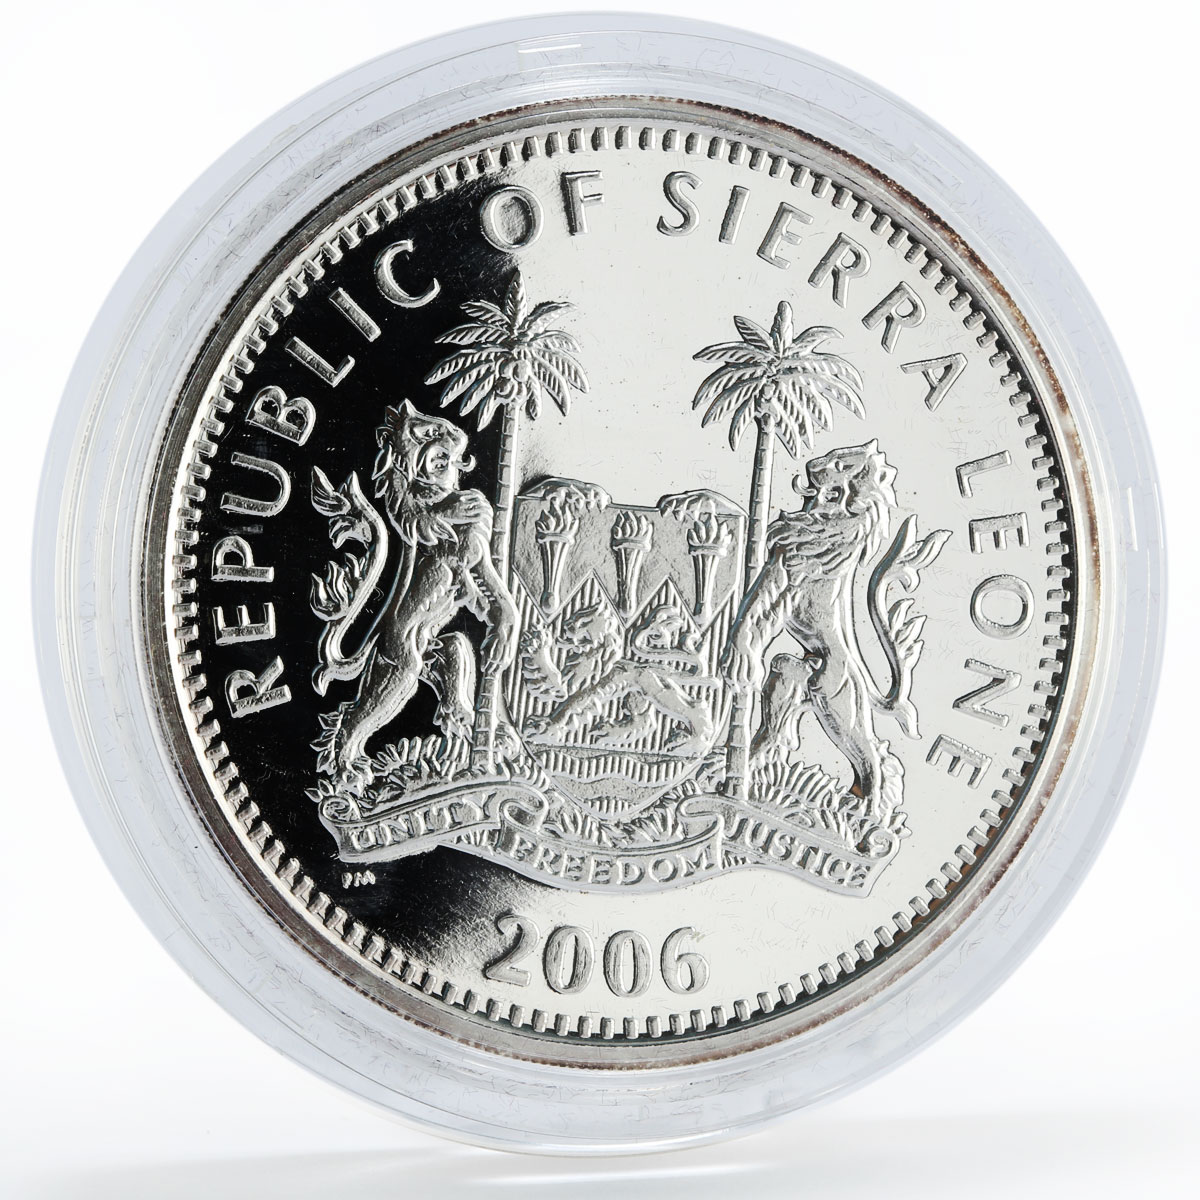 Sierra Leone 20 dollars The Last Supper The Vitruvian Man silver coin 2006